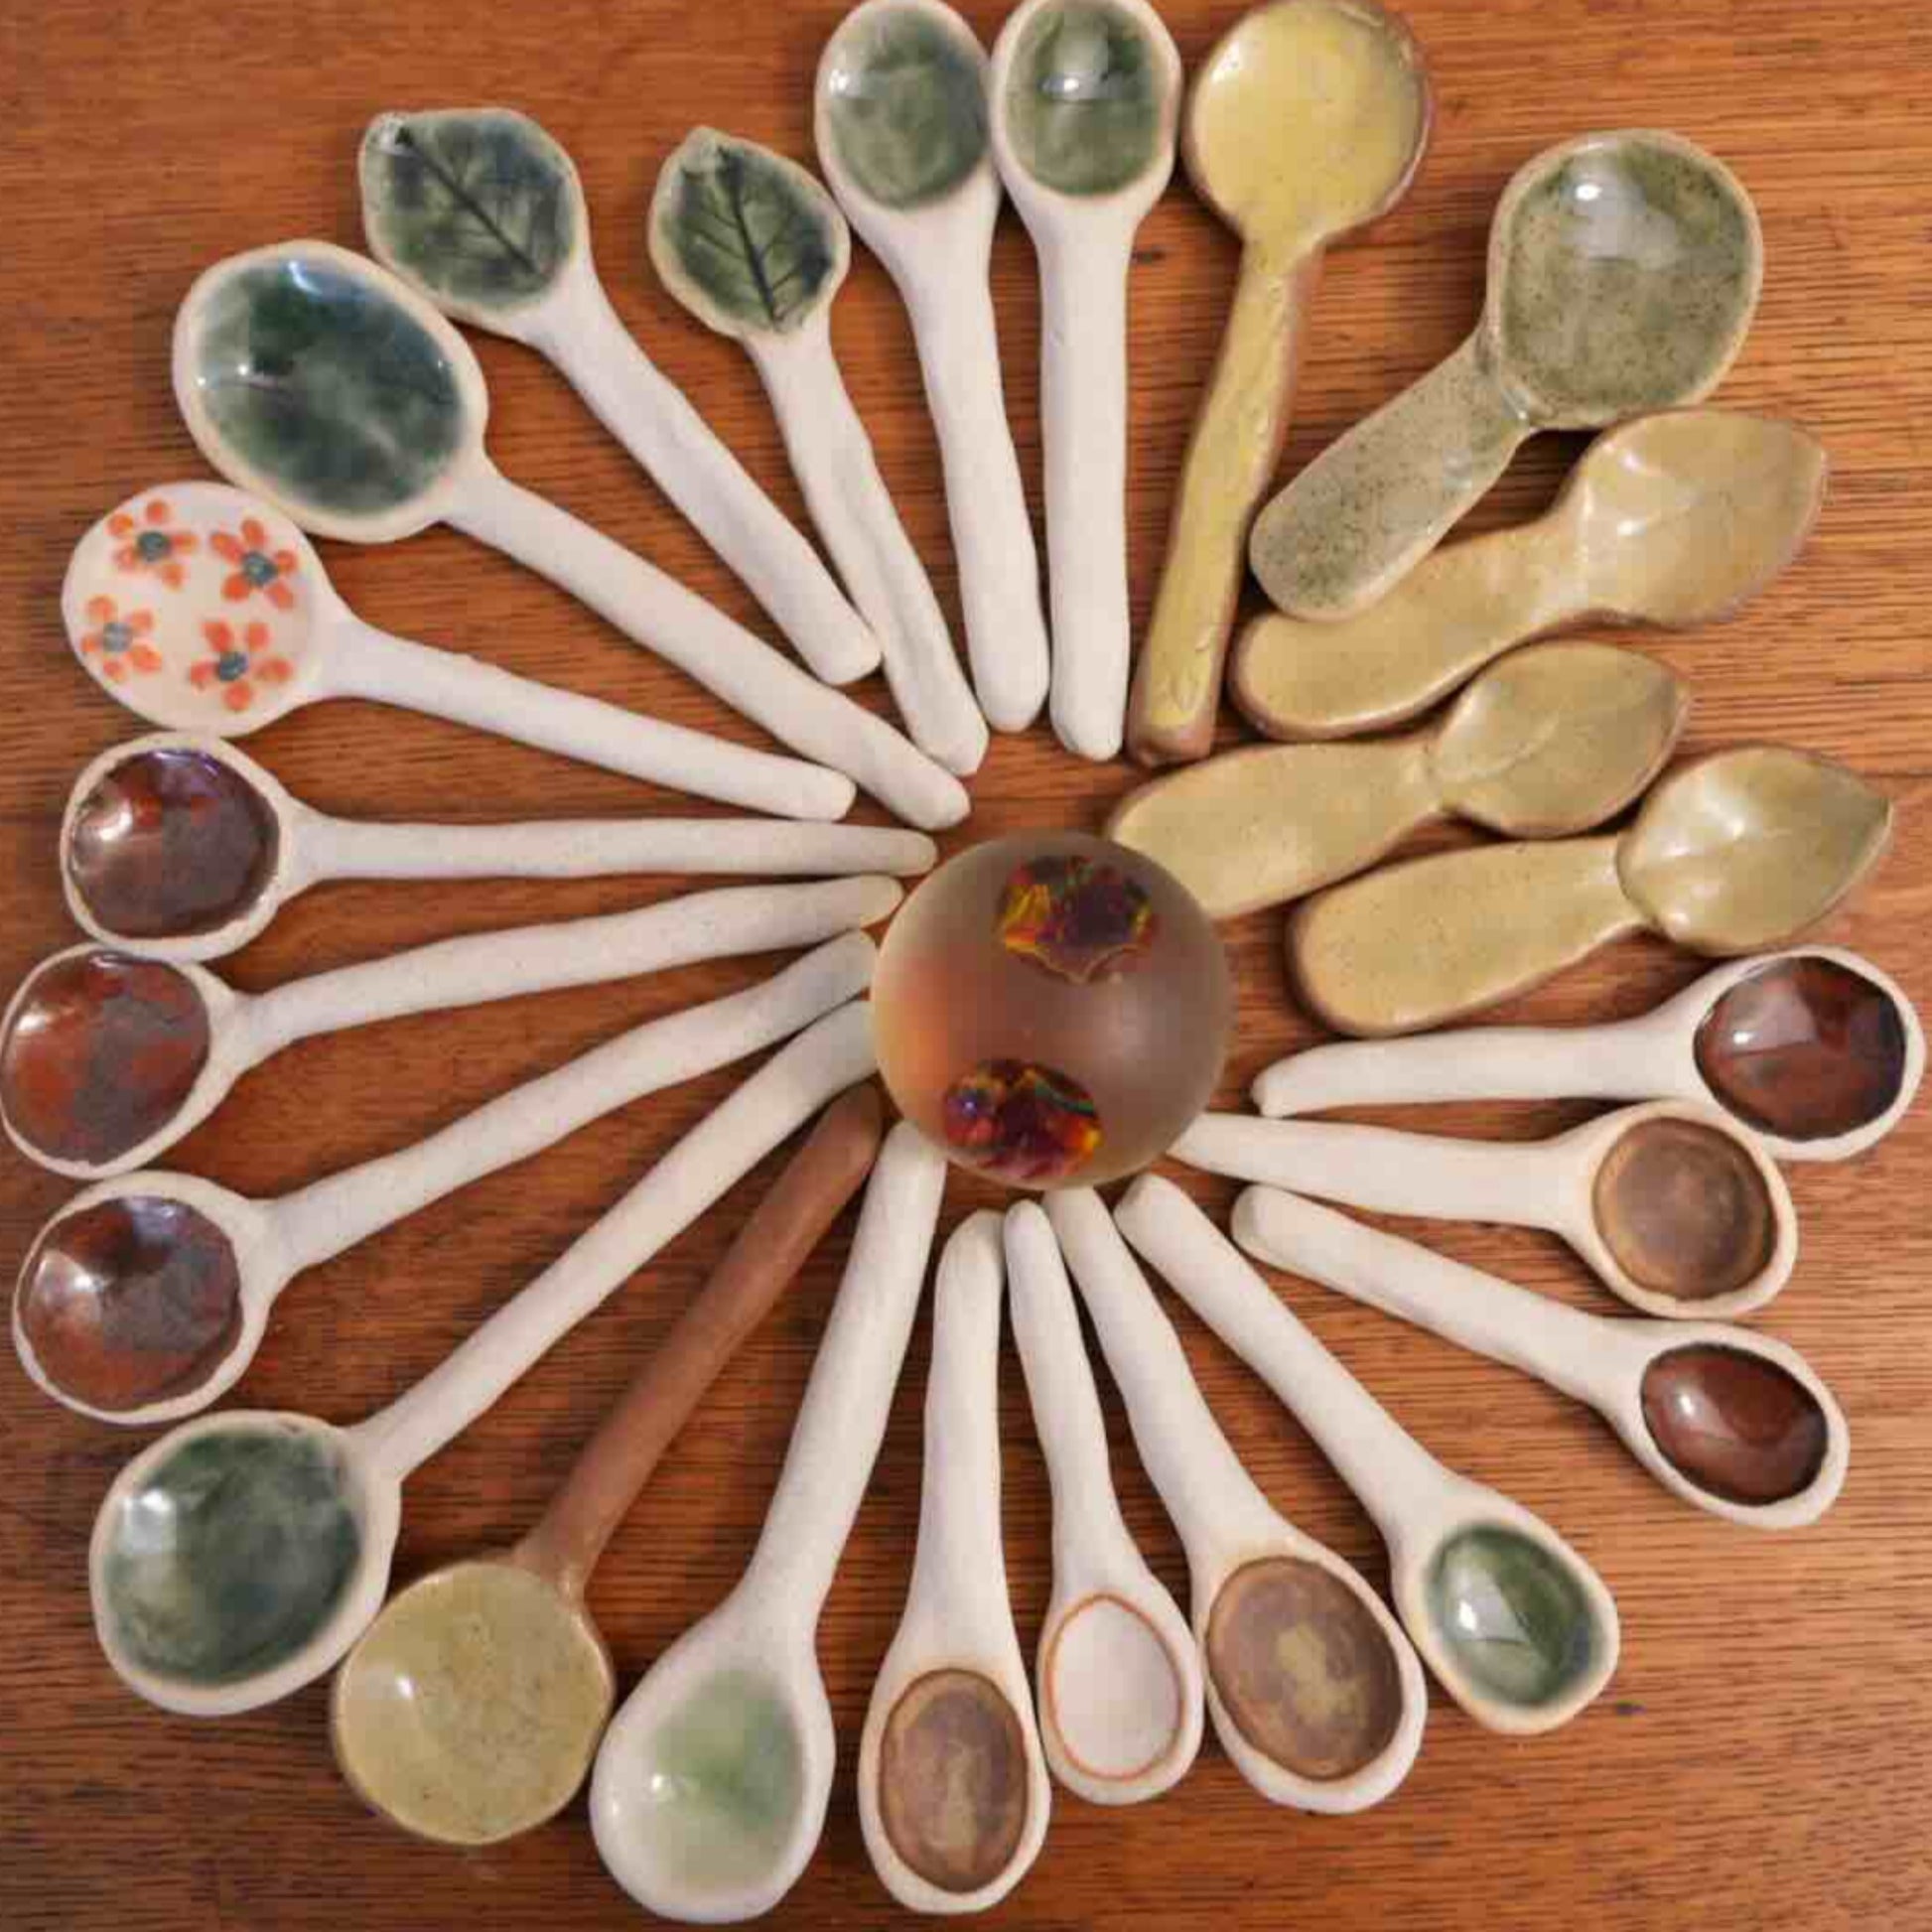 Handmade ceramic spoons